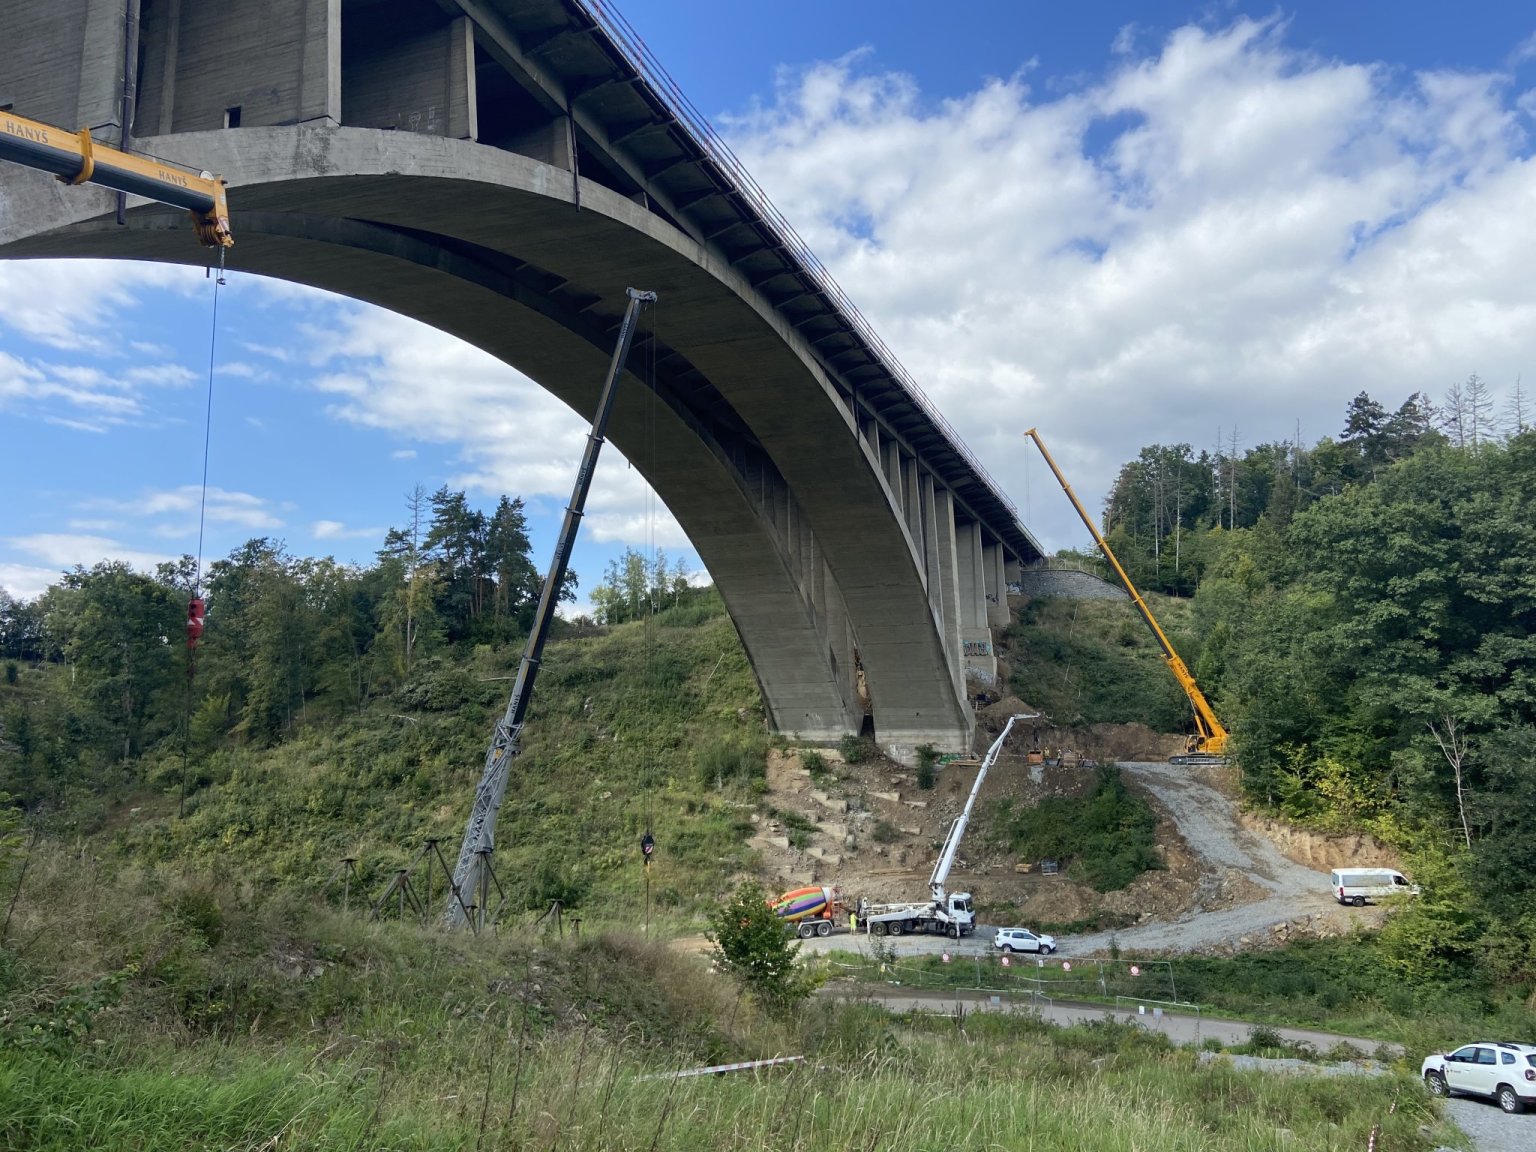 Impozantn oblouky s rozptm 120 metr – klov prvek mostu mejkalka m zstat zachovan. Snmek zachycuje podobu z podzimu 2022, ped zatkem oprav.